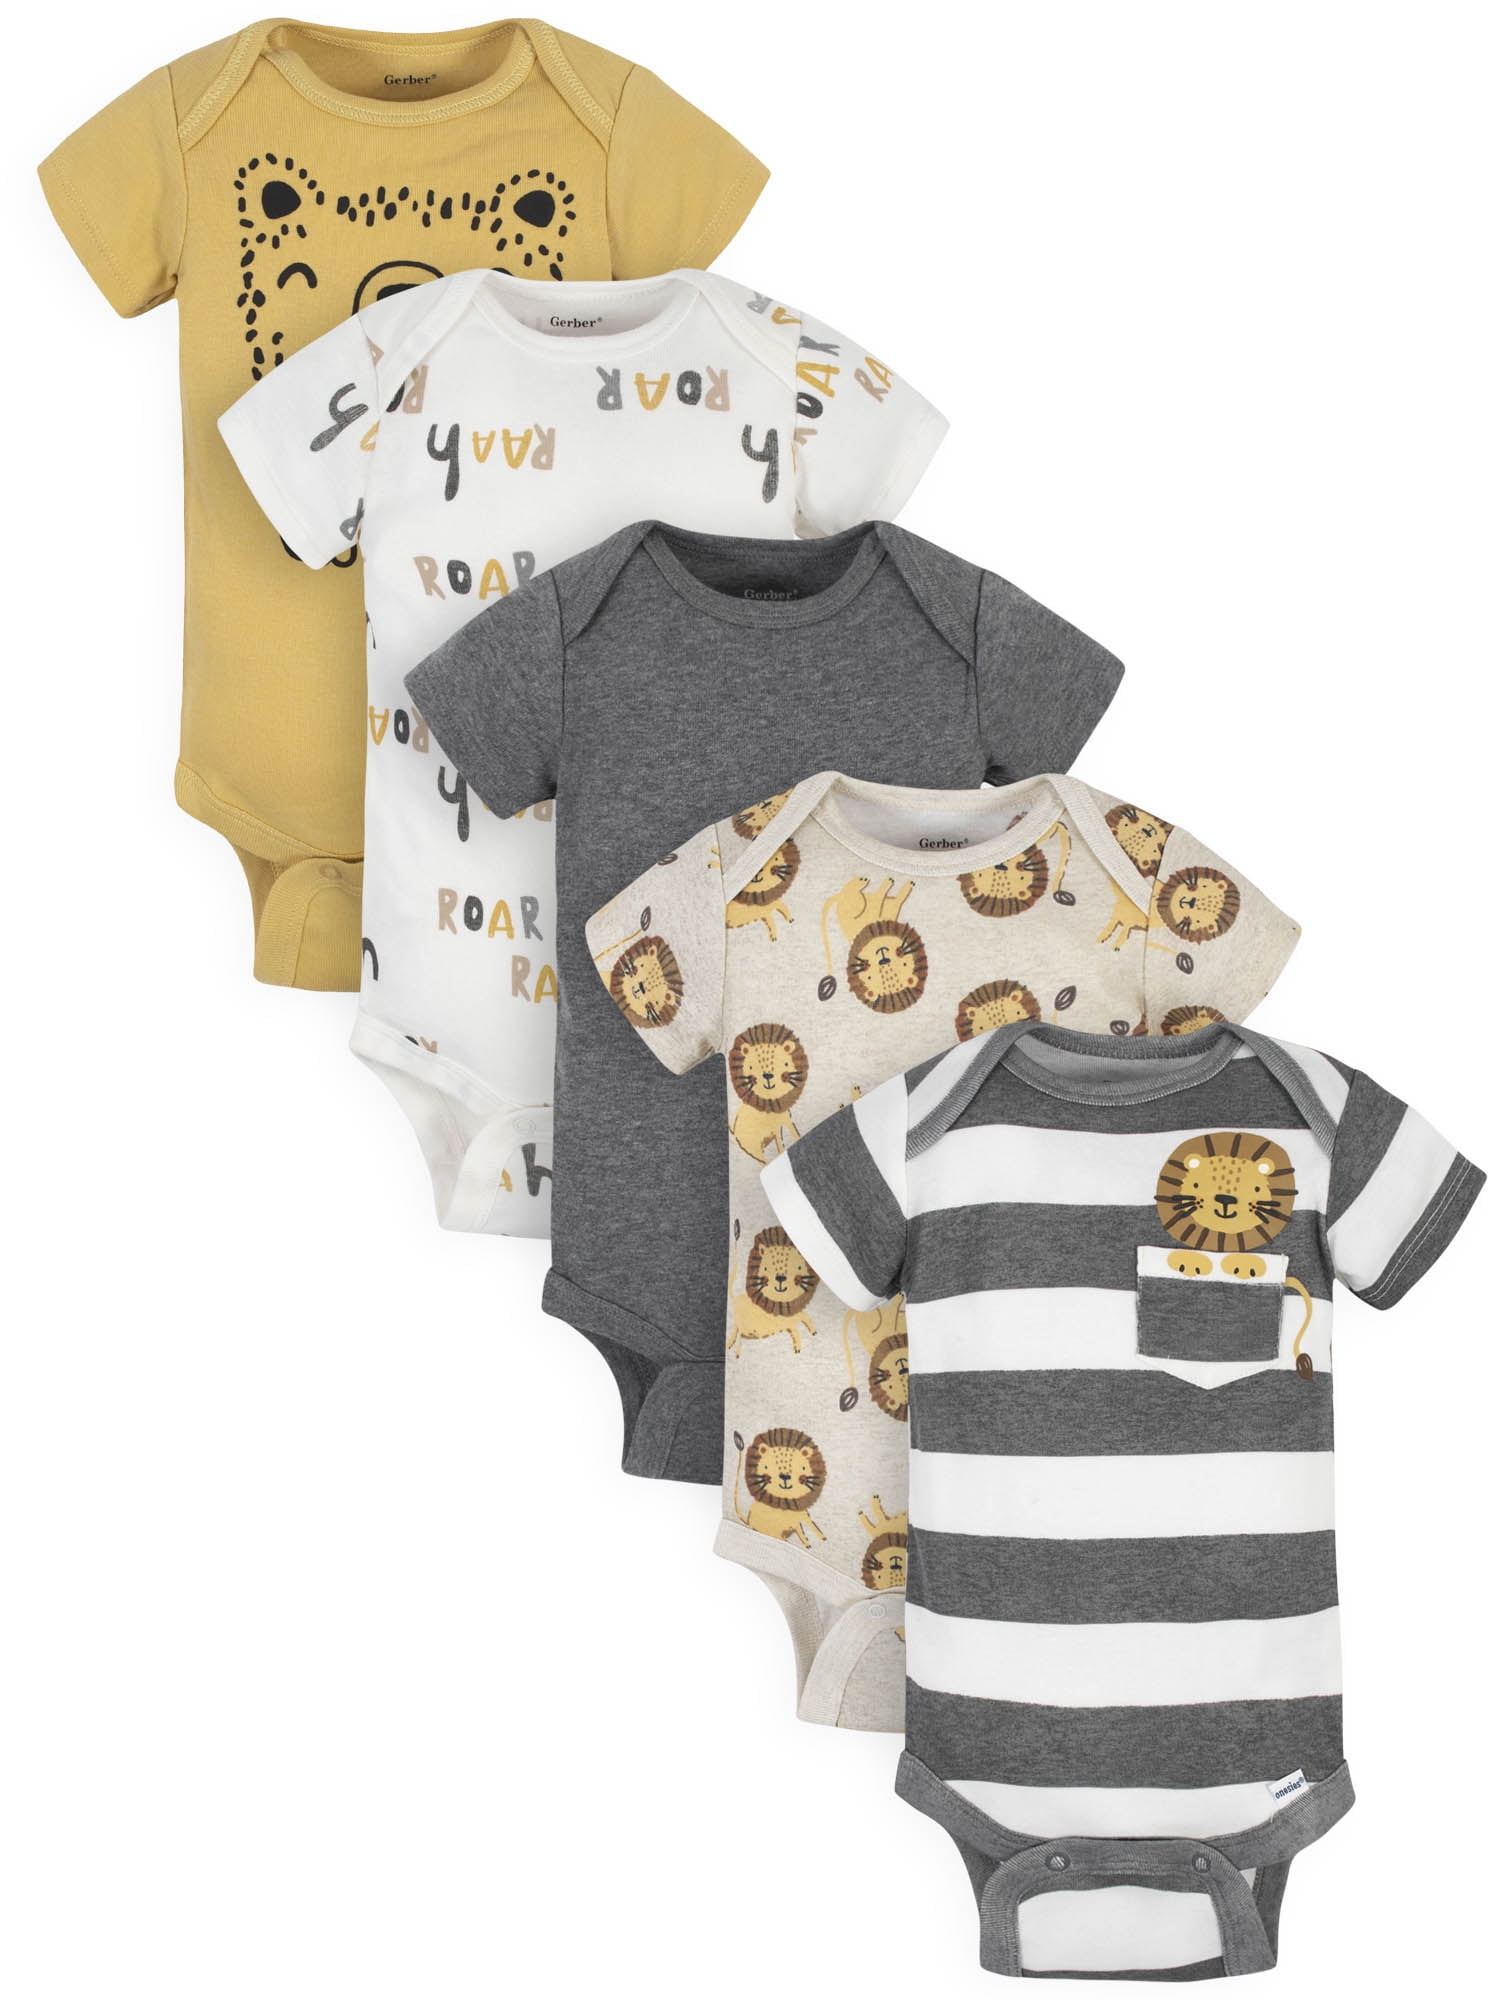 Baby Bodysuit Bone Thugs N Harmony Fashion Infant Short Sleeve Baby Clothes Boys Girls 0-24 Month 